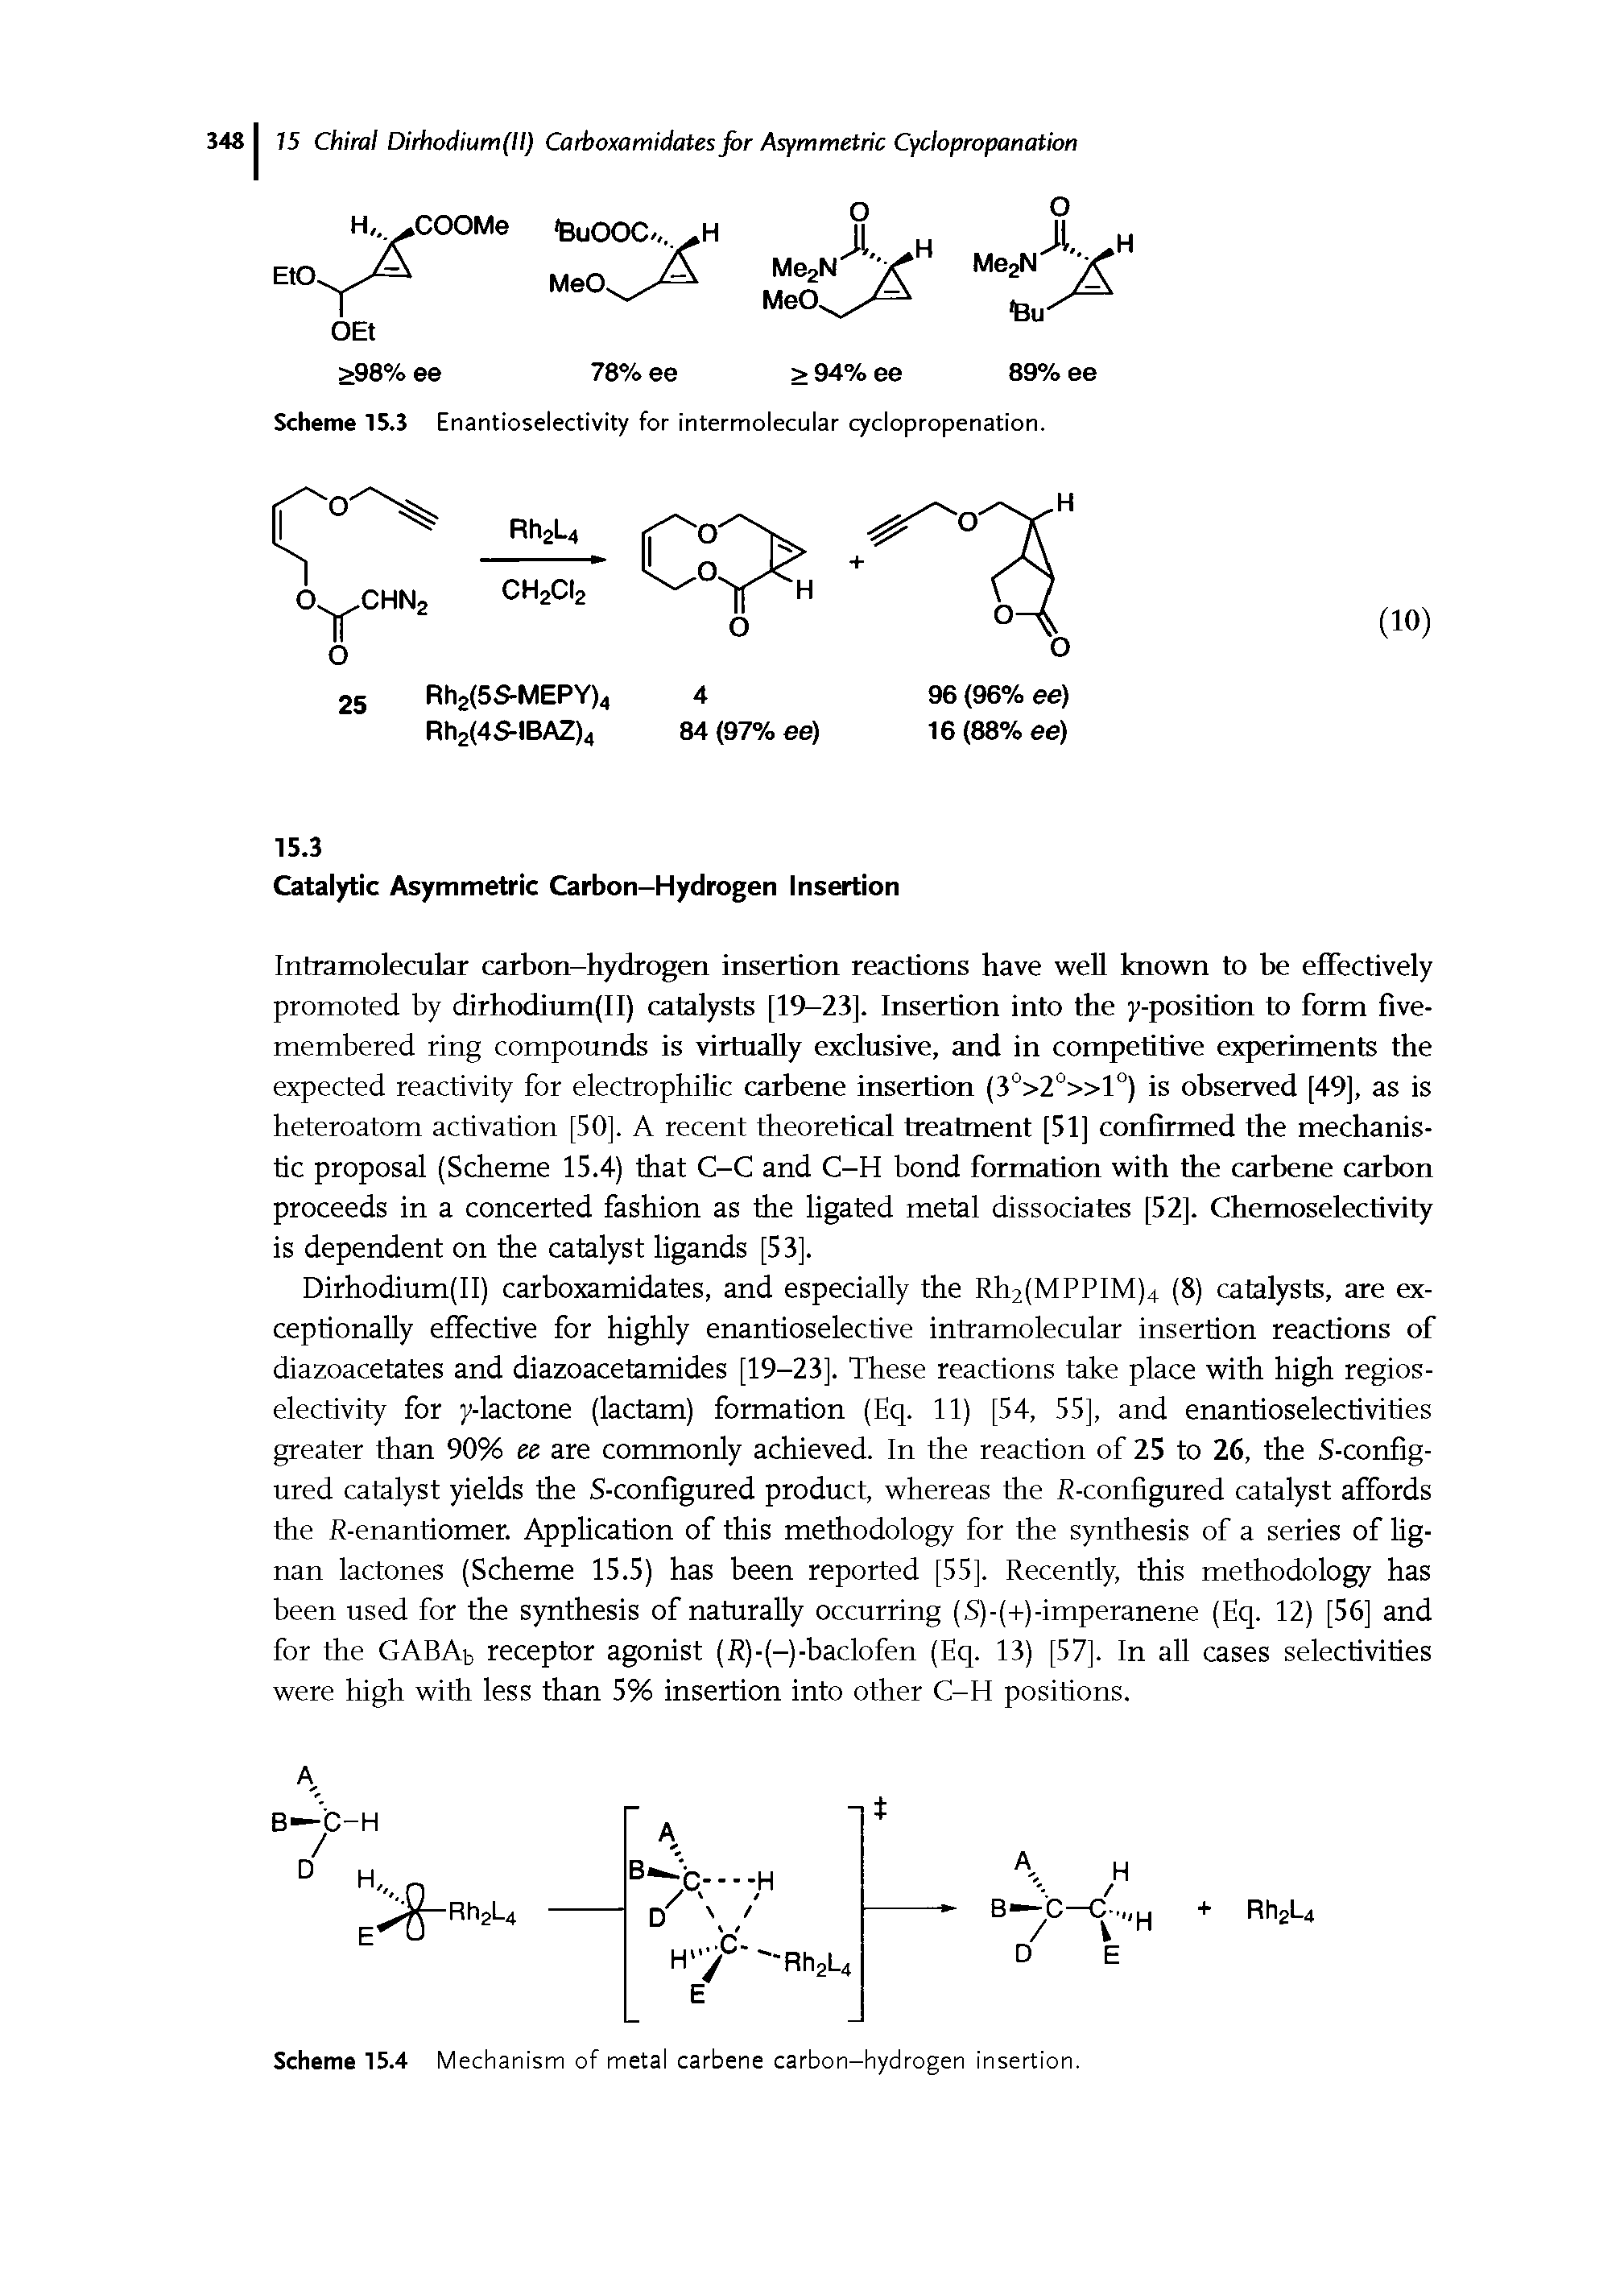 Scheme 15.4 Mechanism of metal carbene carbon-hydrogen insertion.